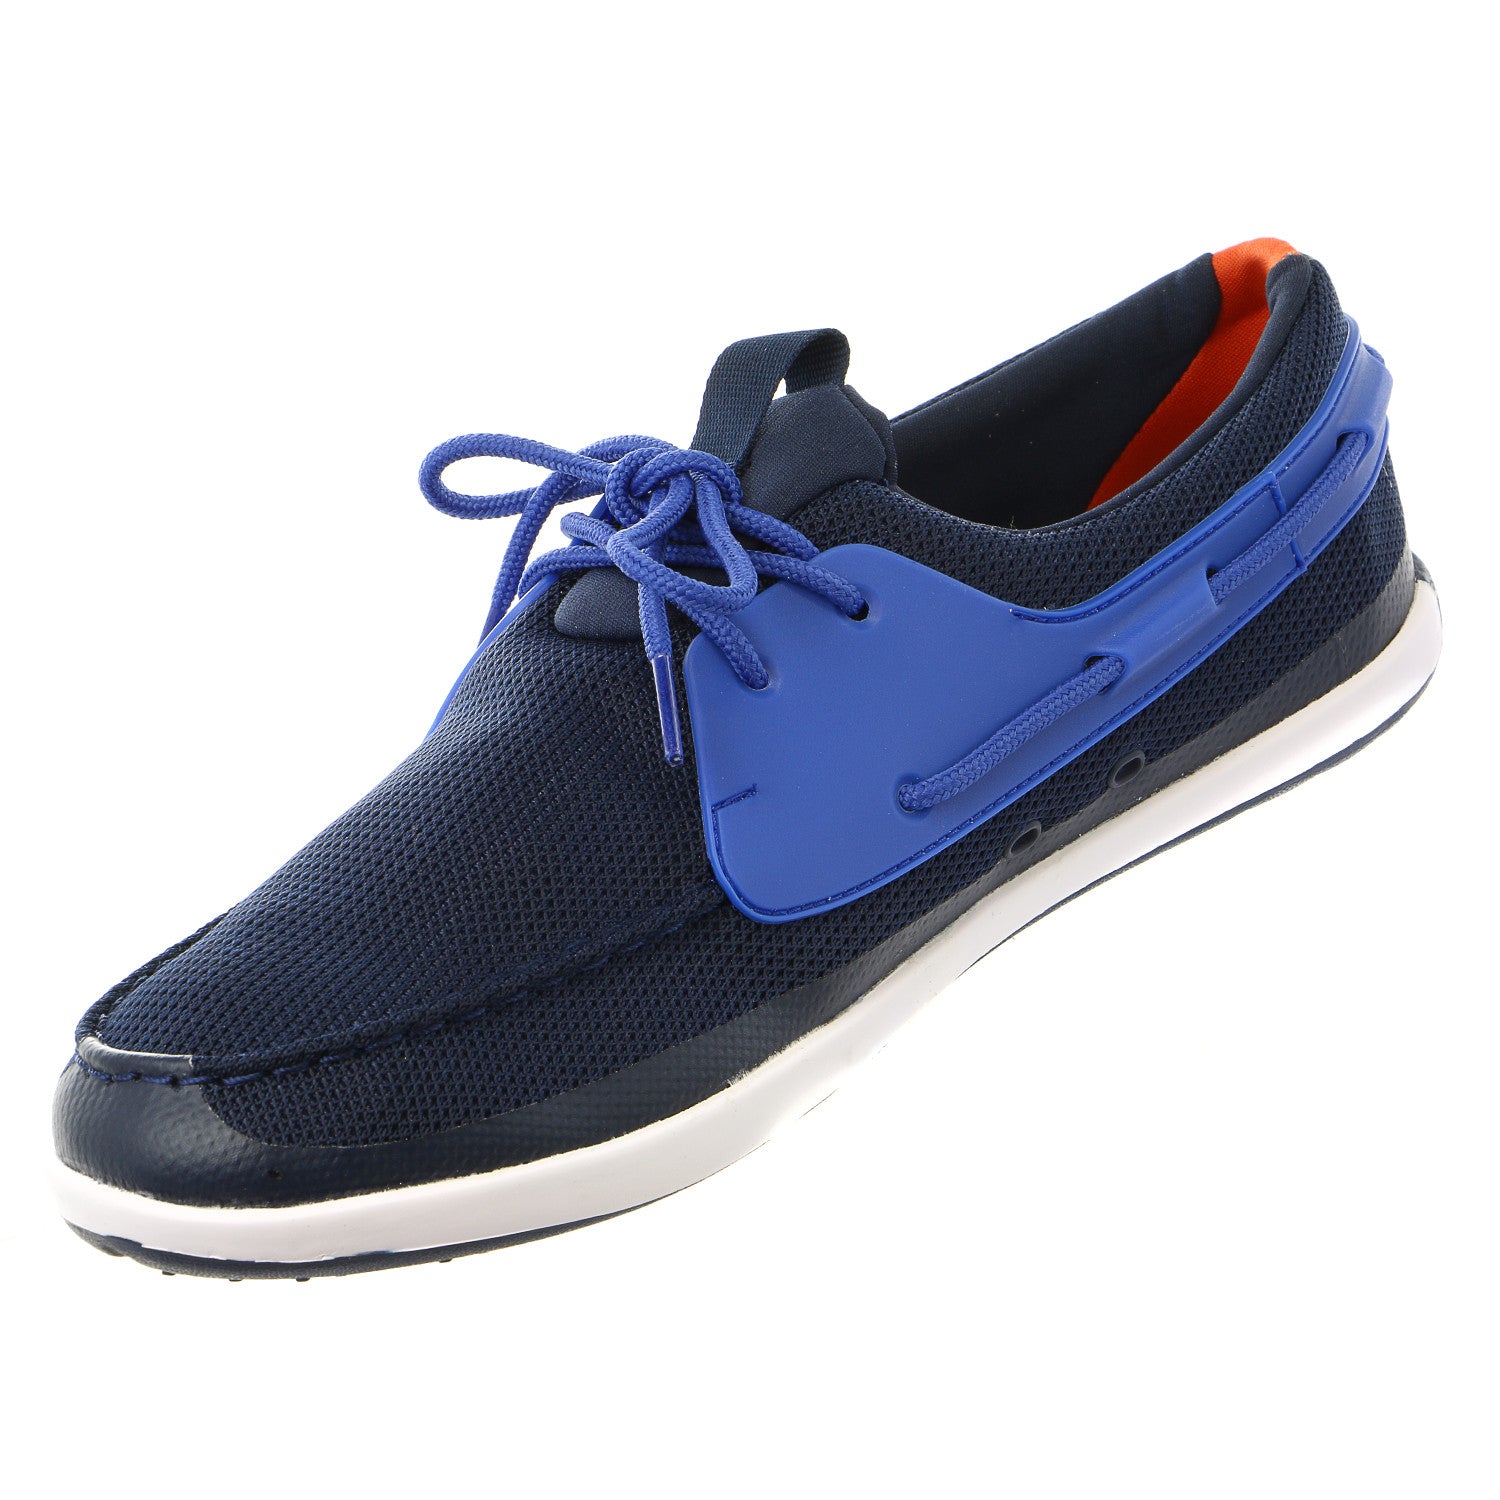 Pind ballade klip Lacoste L.Andsailing 116 1 Fashion Sneaker Moccasin Boat Shoe - Mens -  Shoplifestyle